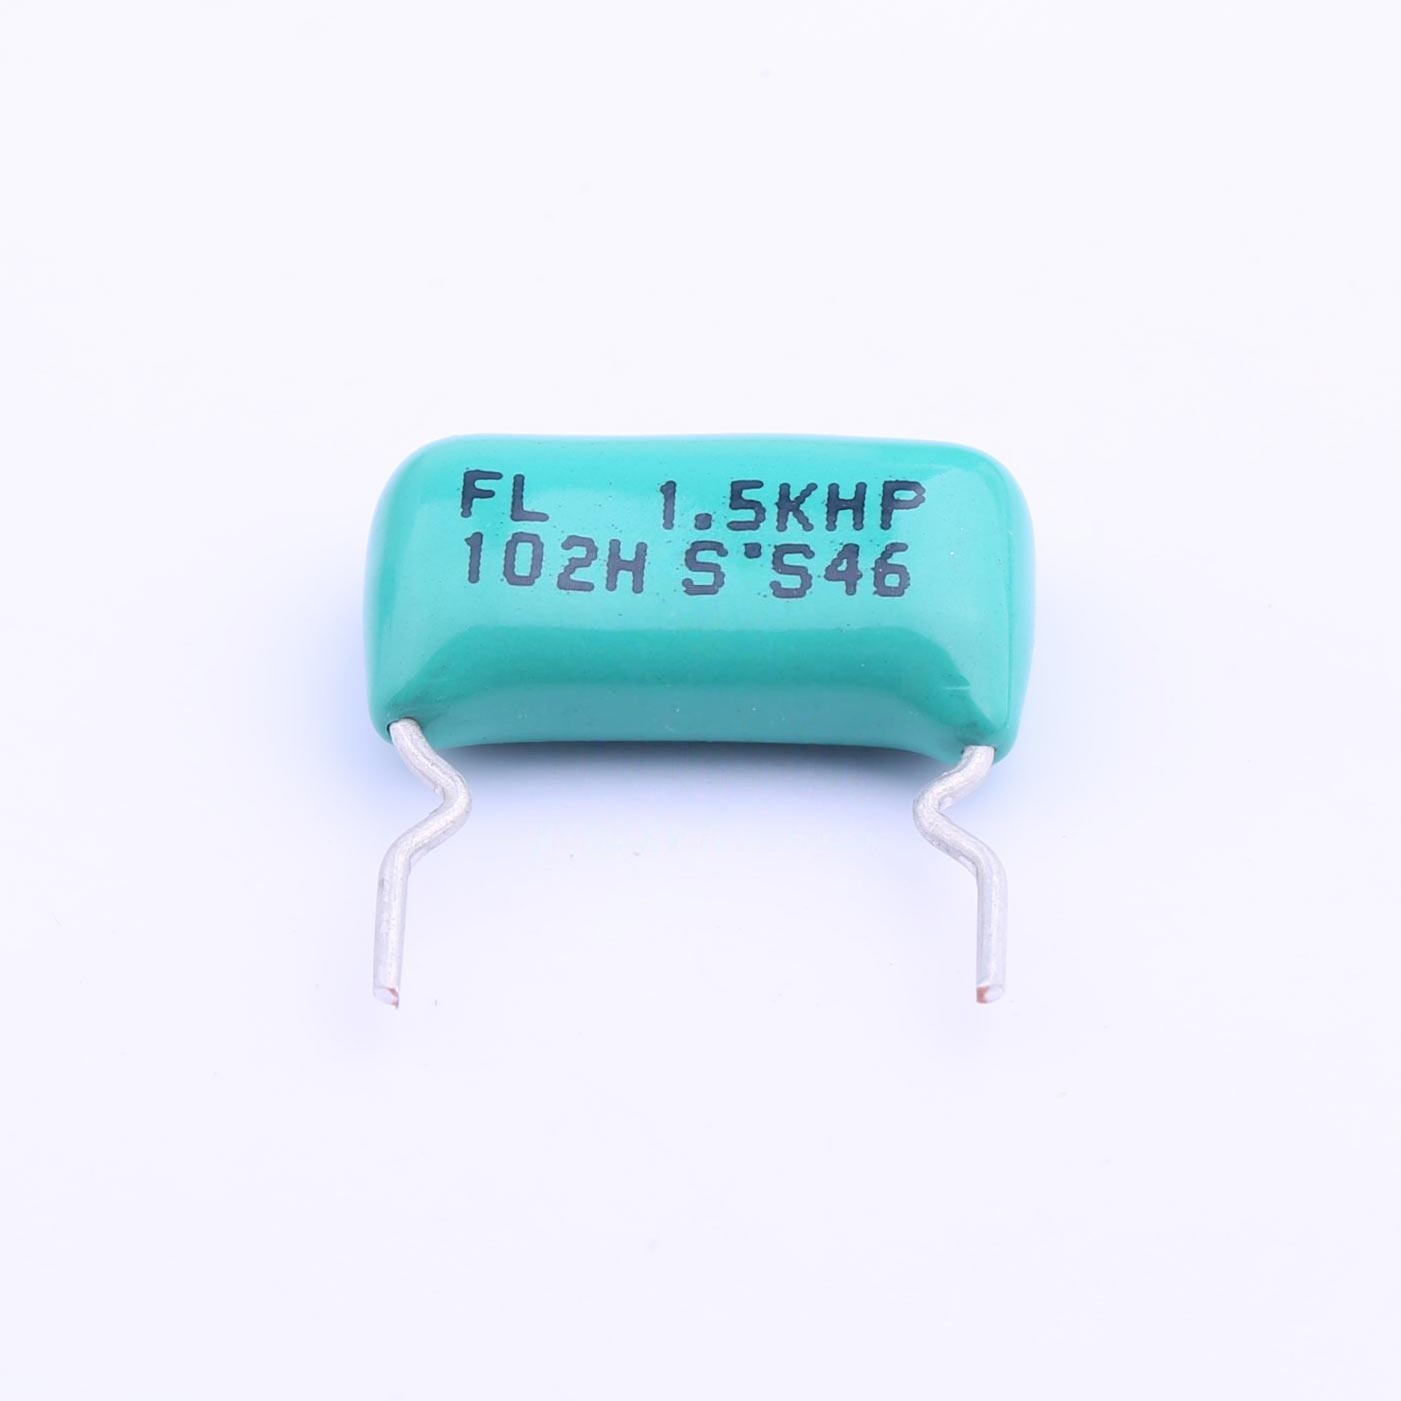 FLS(441) 1500HP 102H B30F_未分类